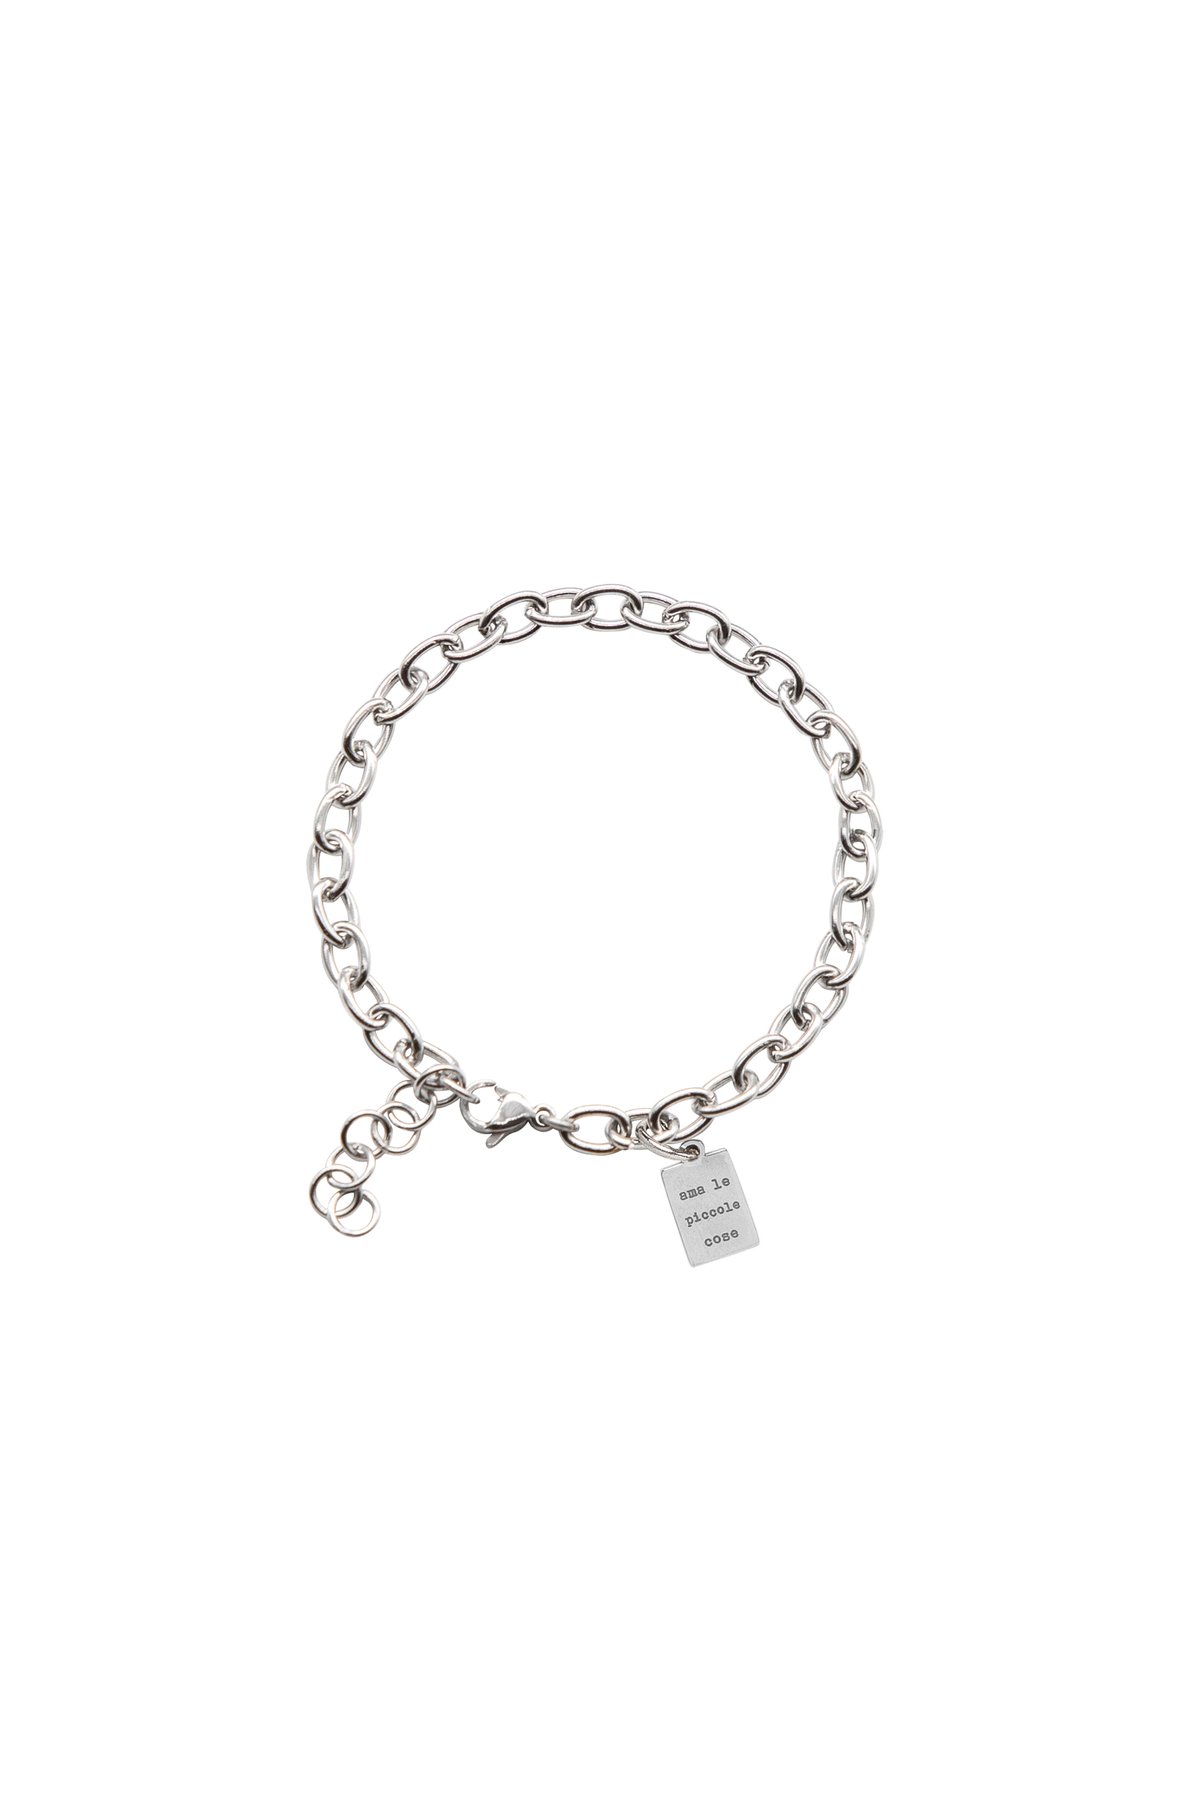 Image of Ama le piccole cose ⭑ bracelet in silver